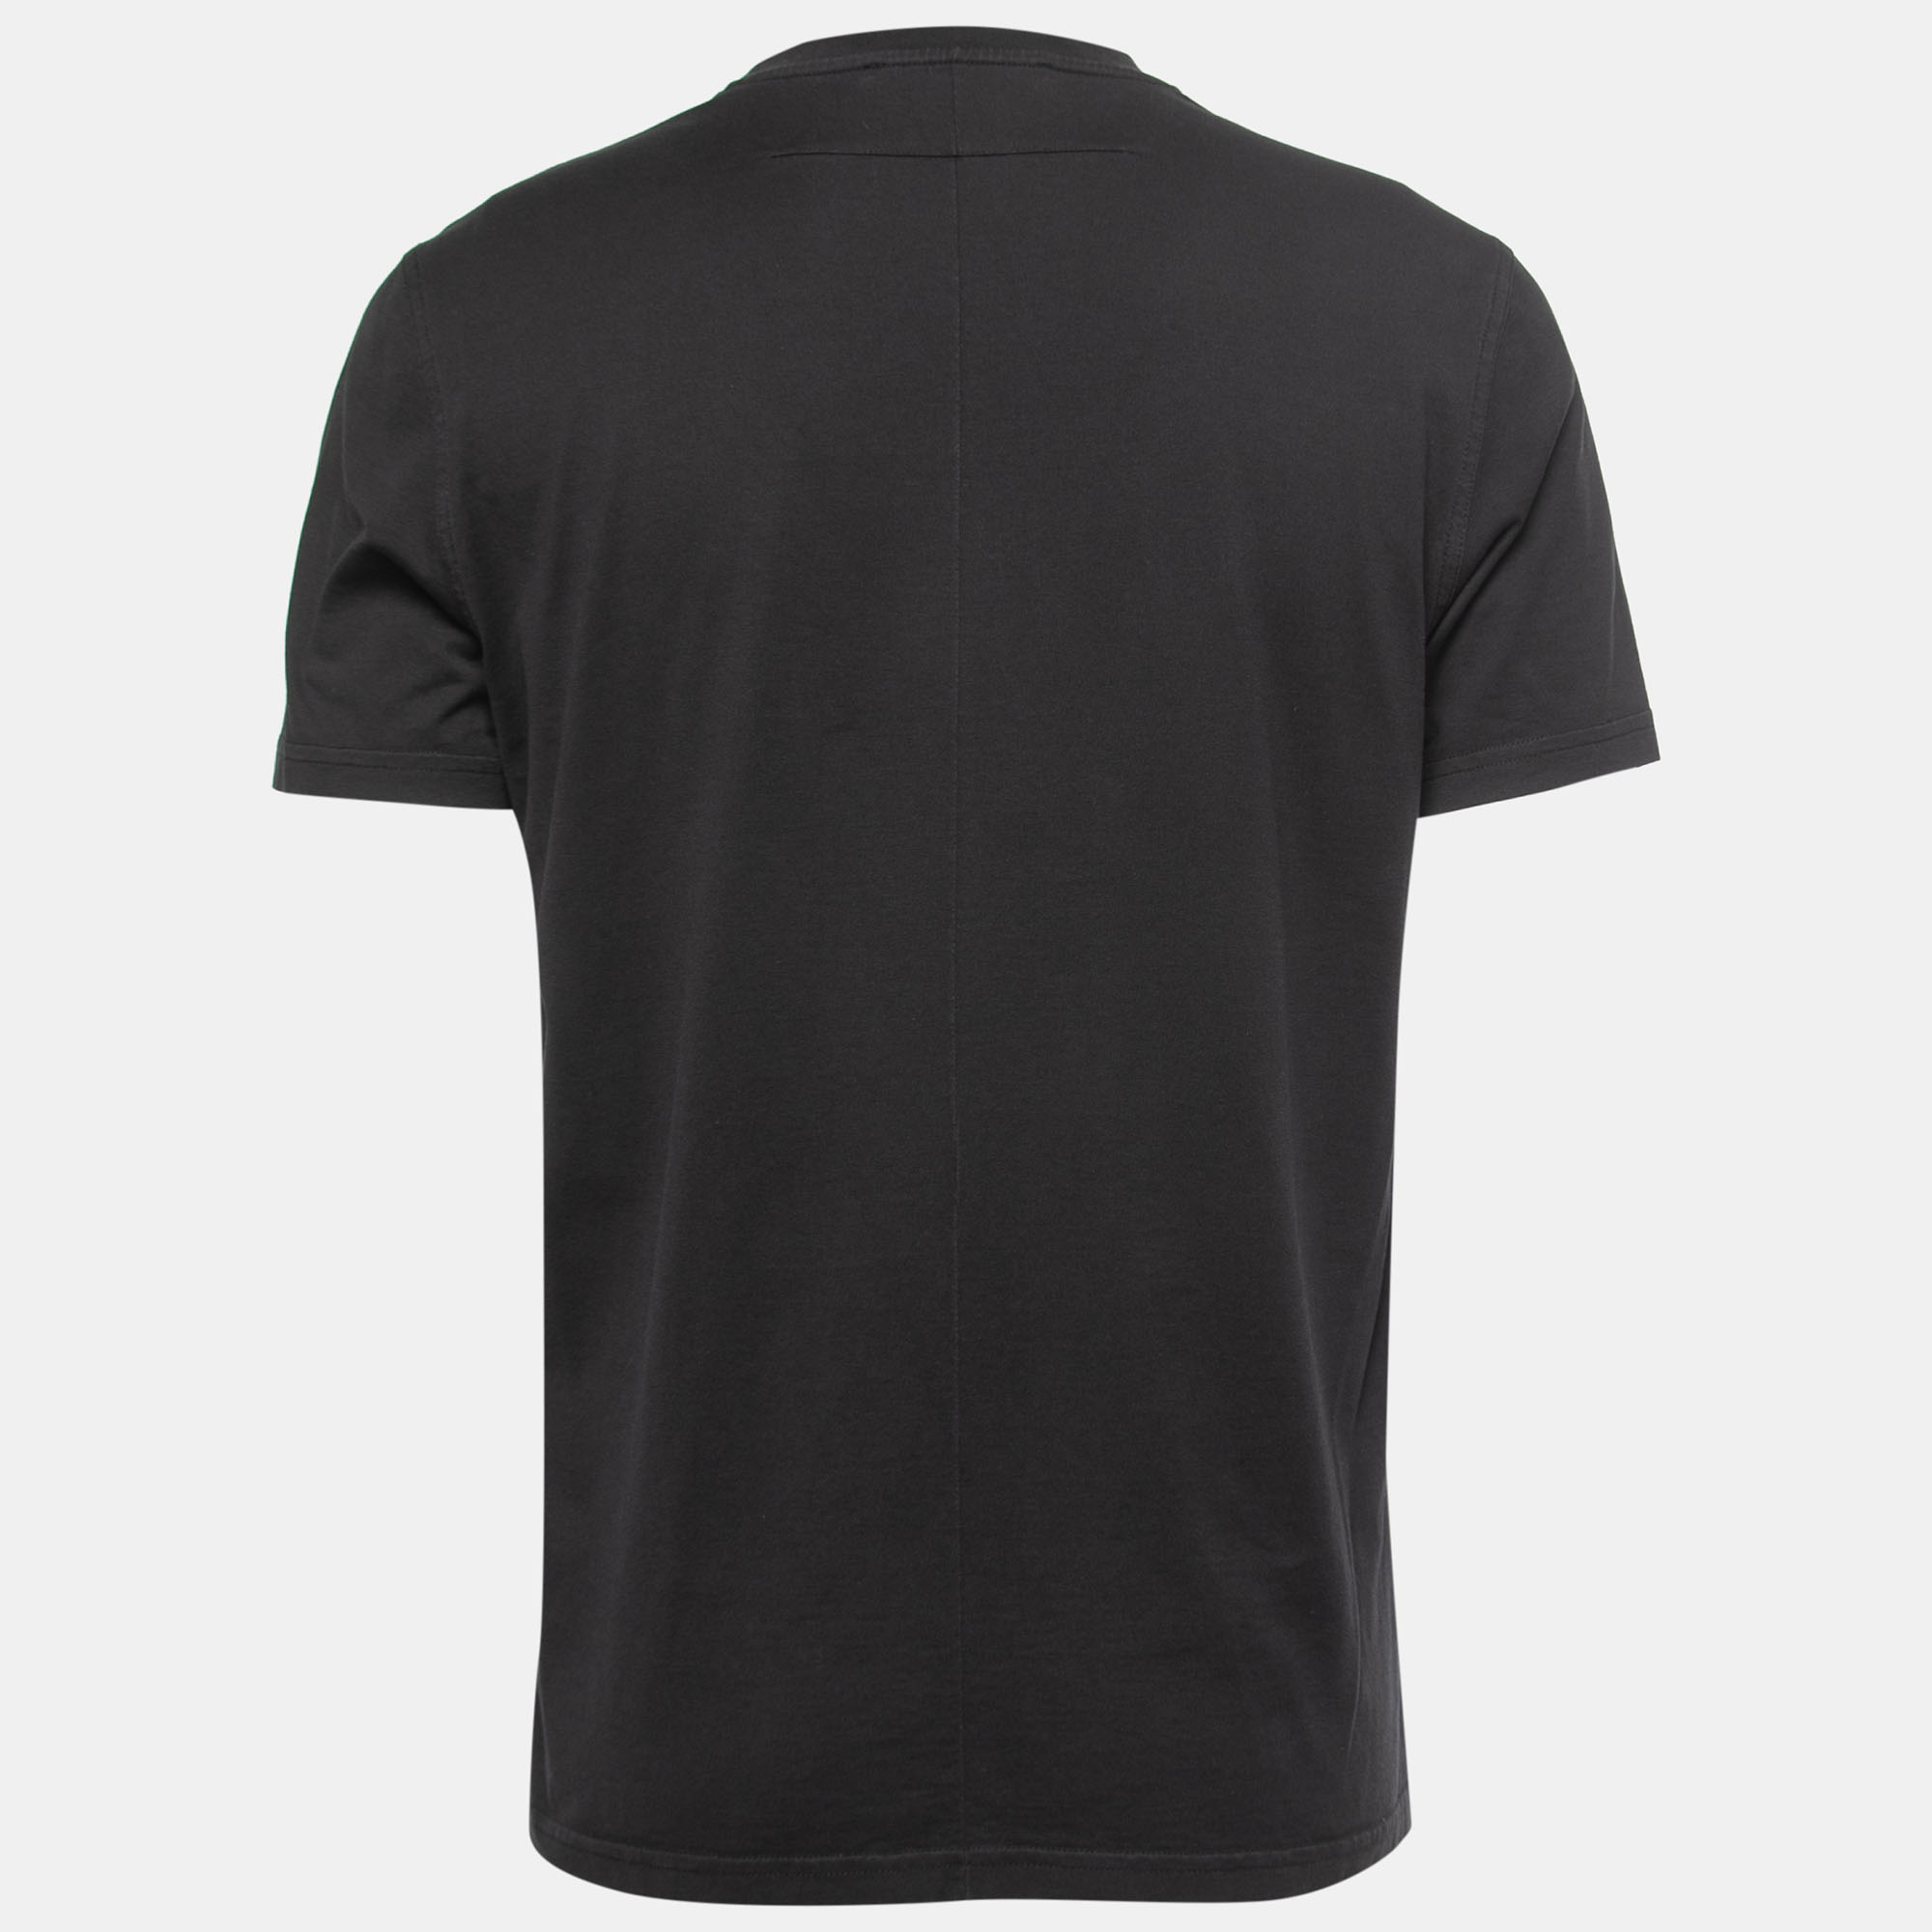 

Givenchy Black "I Feel Love" Printed Cotton Crew Neck Short Sleeve T-Shirt